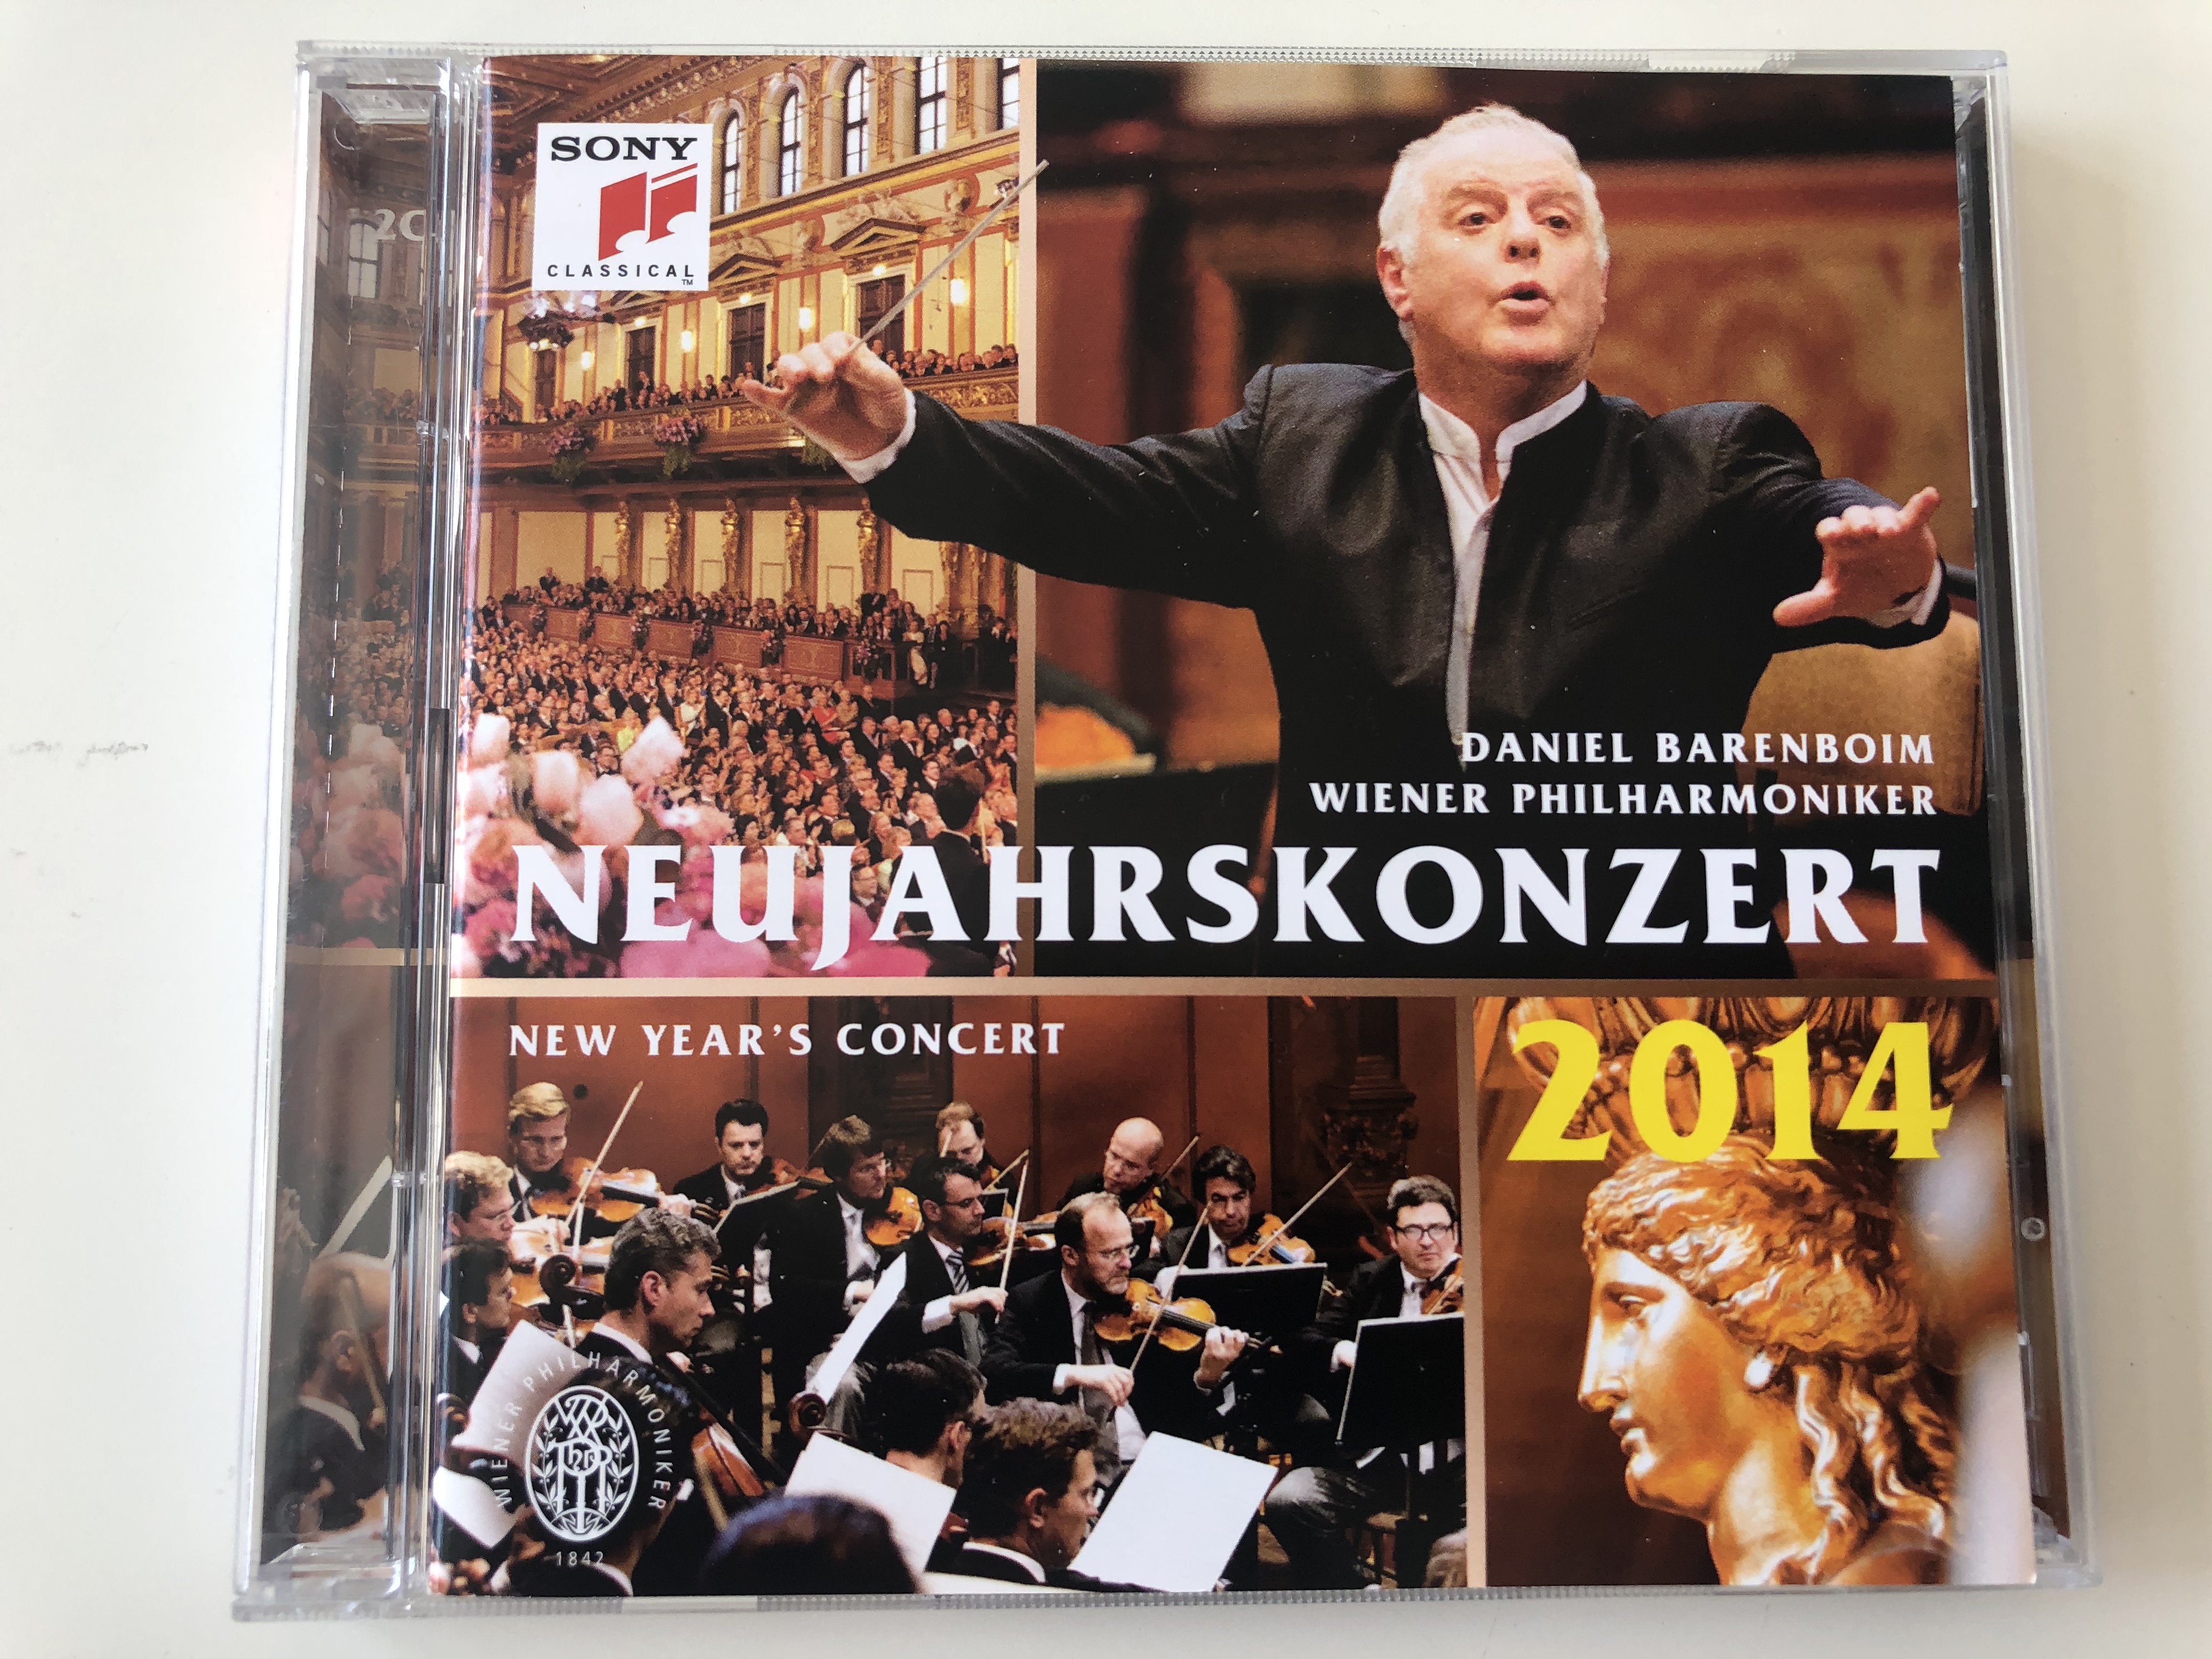 daniel-barenboim-wiener-philharmoniker-neujahrskonzert-new-year-s-concert-2014-sony-classical-2x-audio-cd-2014-88883792262-1-.jpg